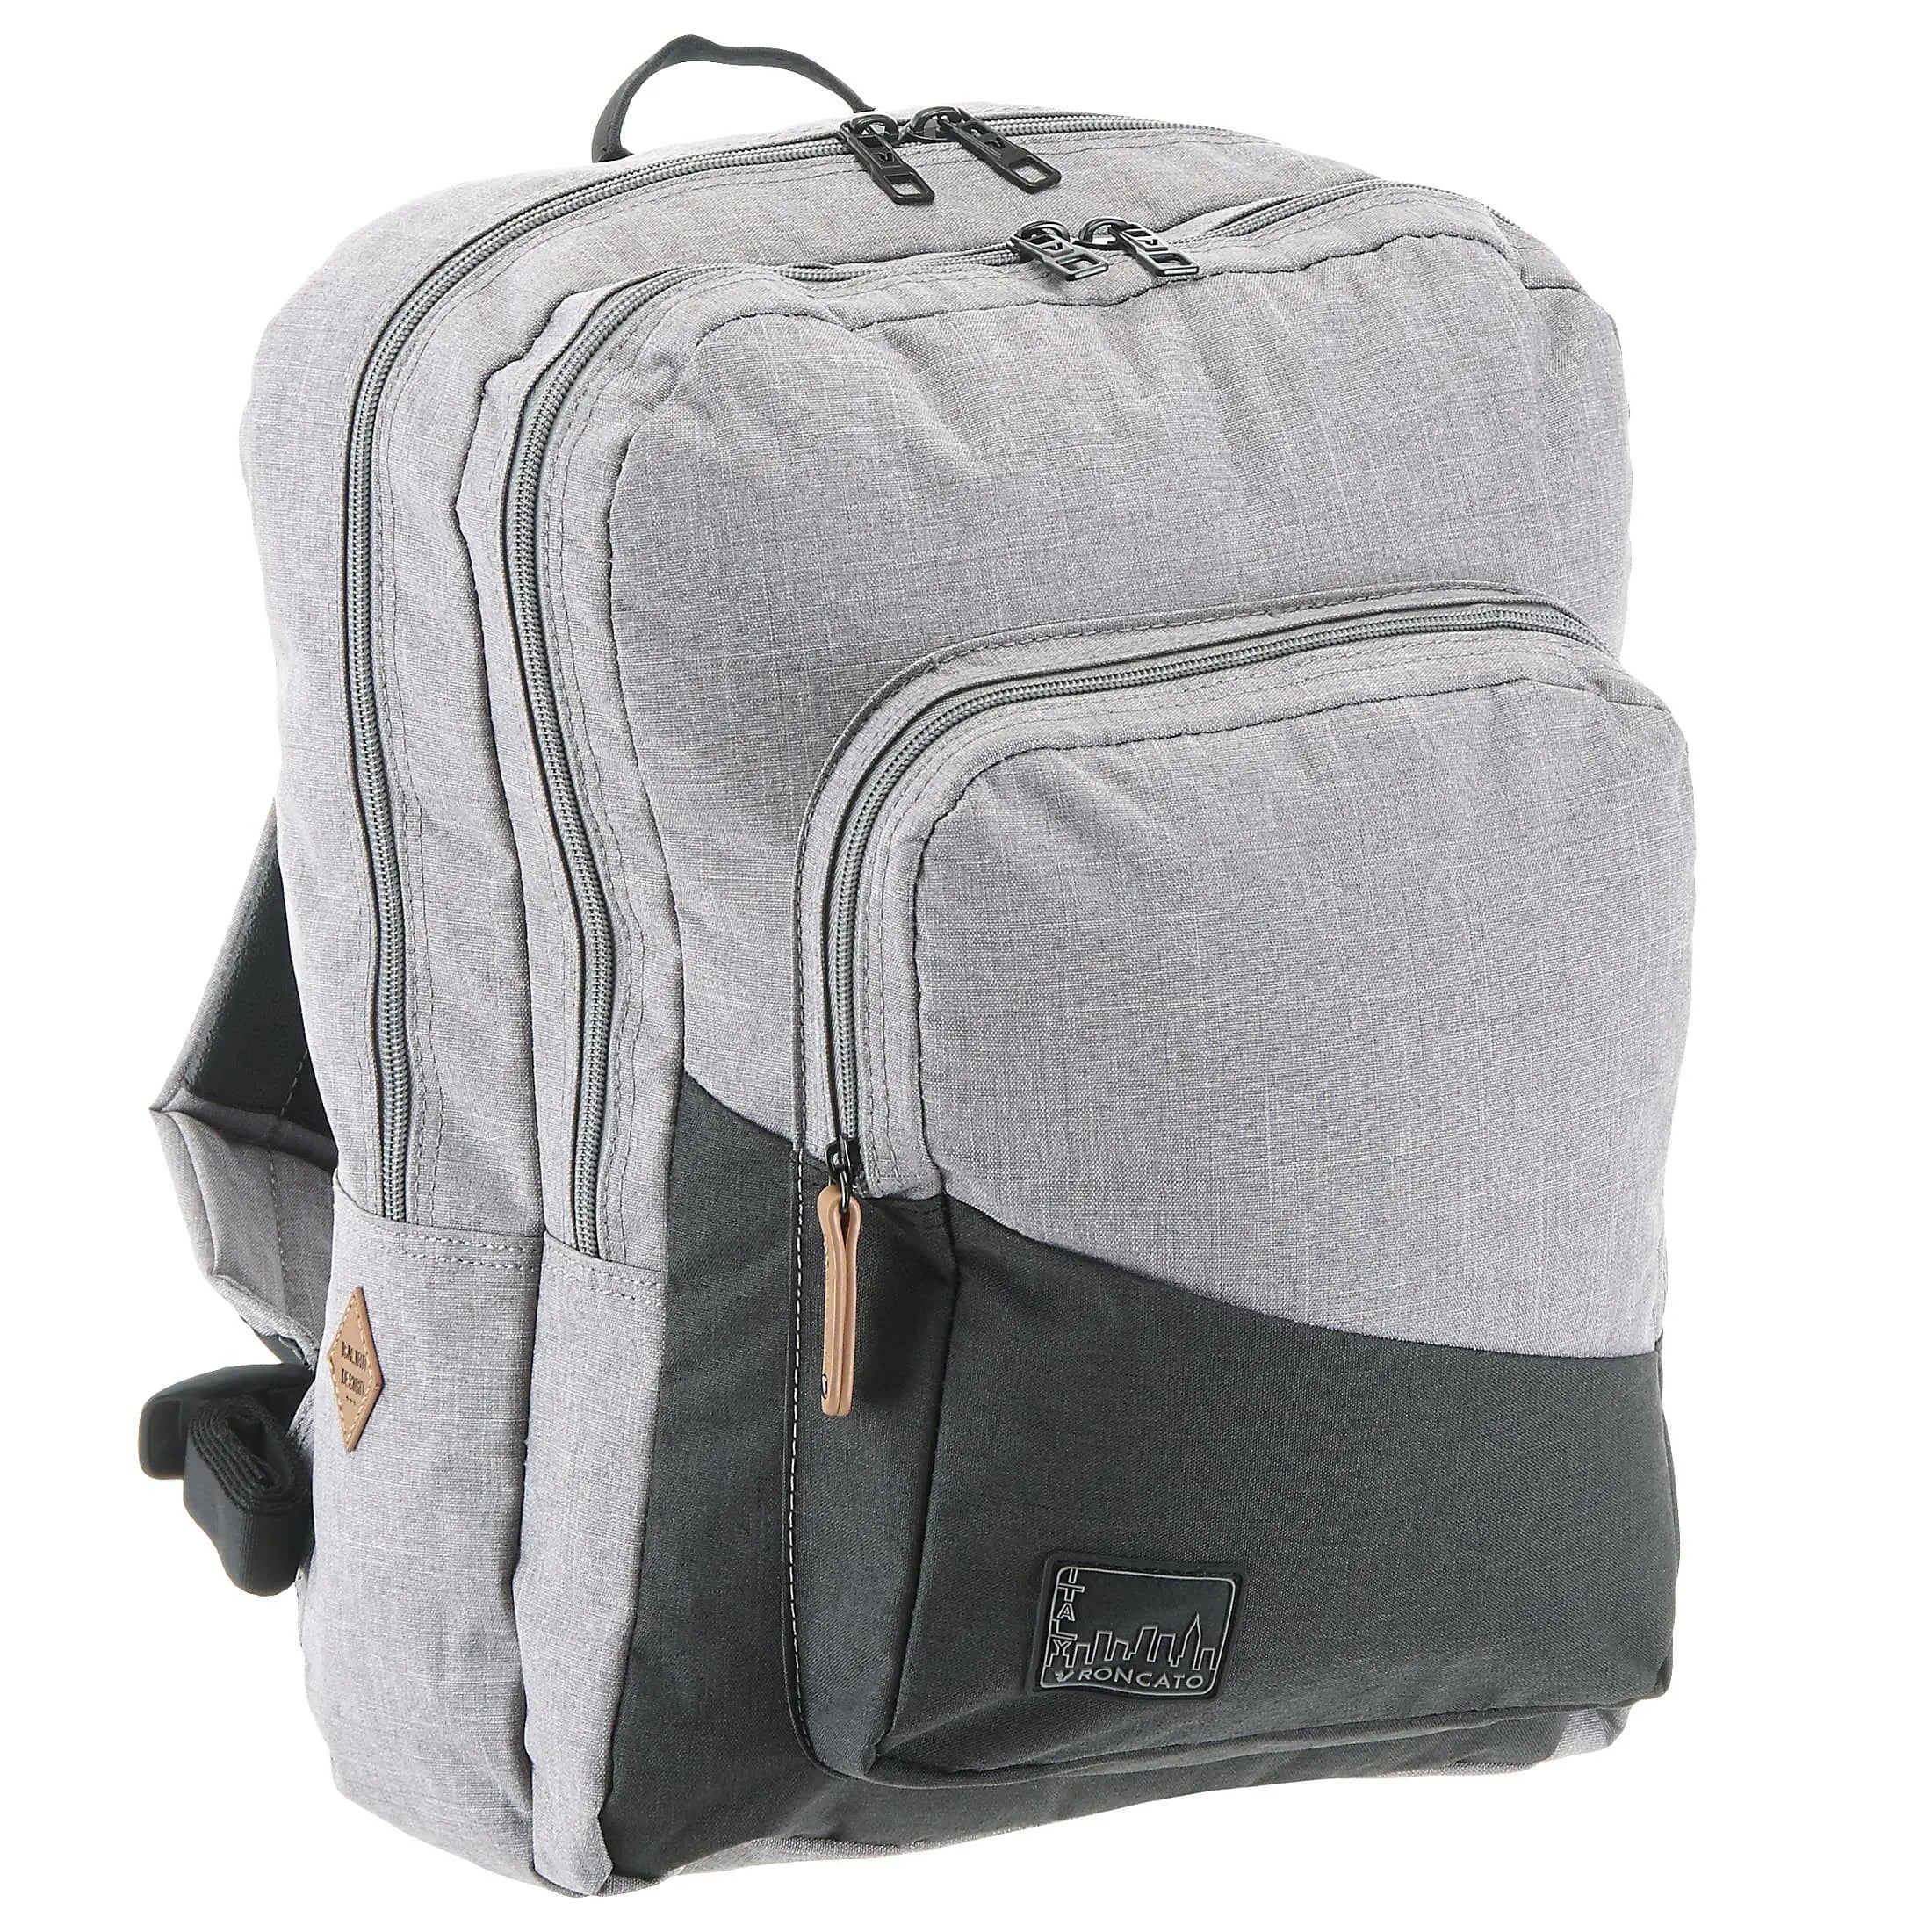 Roncato Adventure laptop backpack 40 cm - black